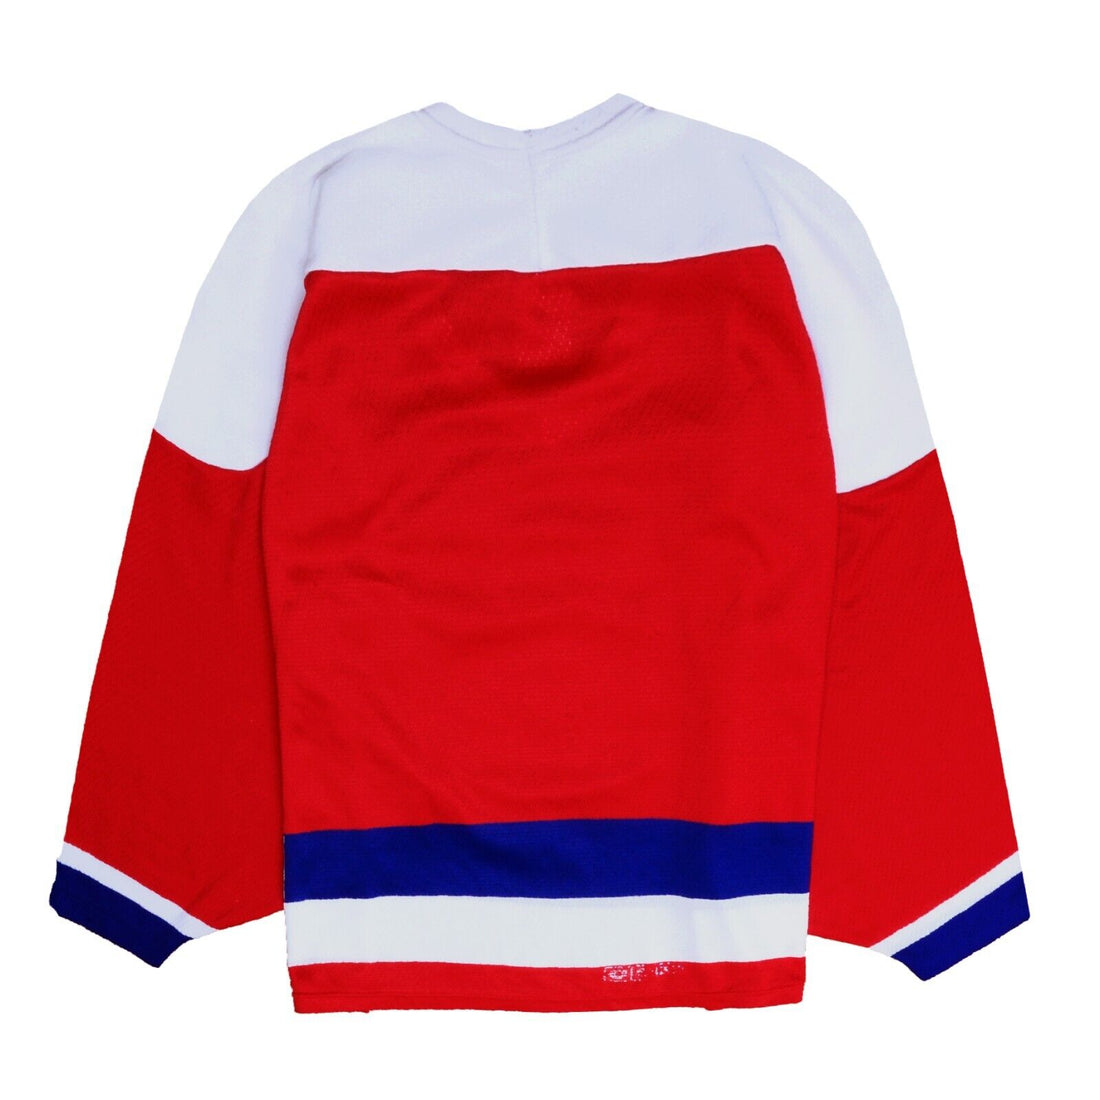 Vintage Dukes Of Hamilton CCM Maska Hockey Jersey Size Large Red 90s OHL